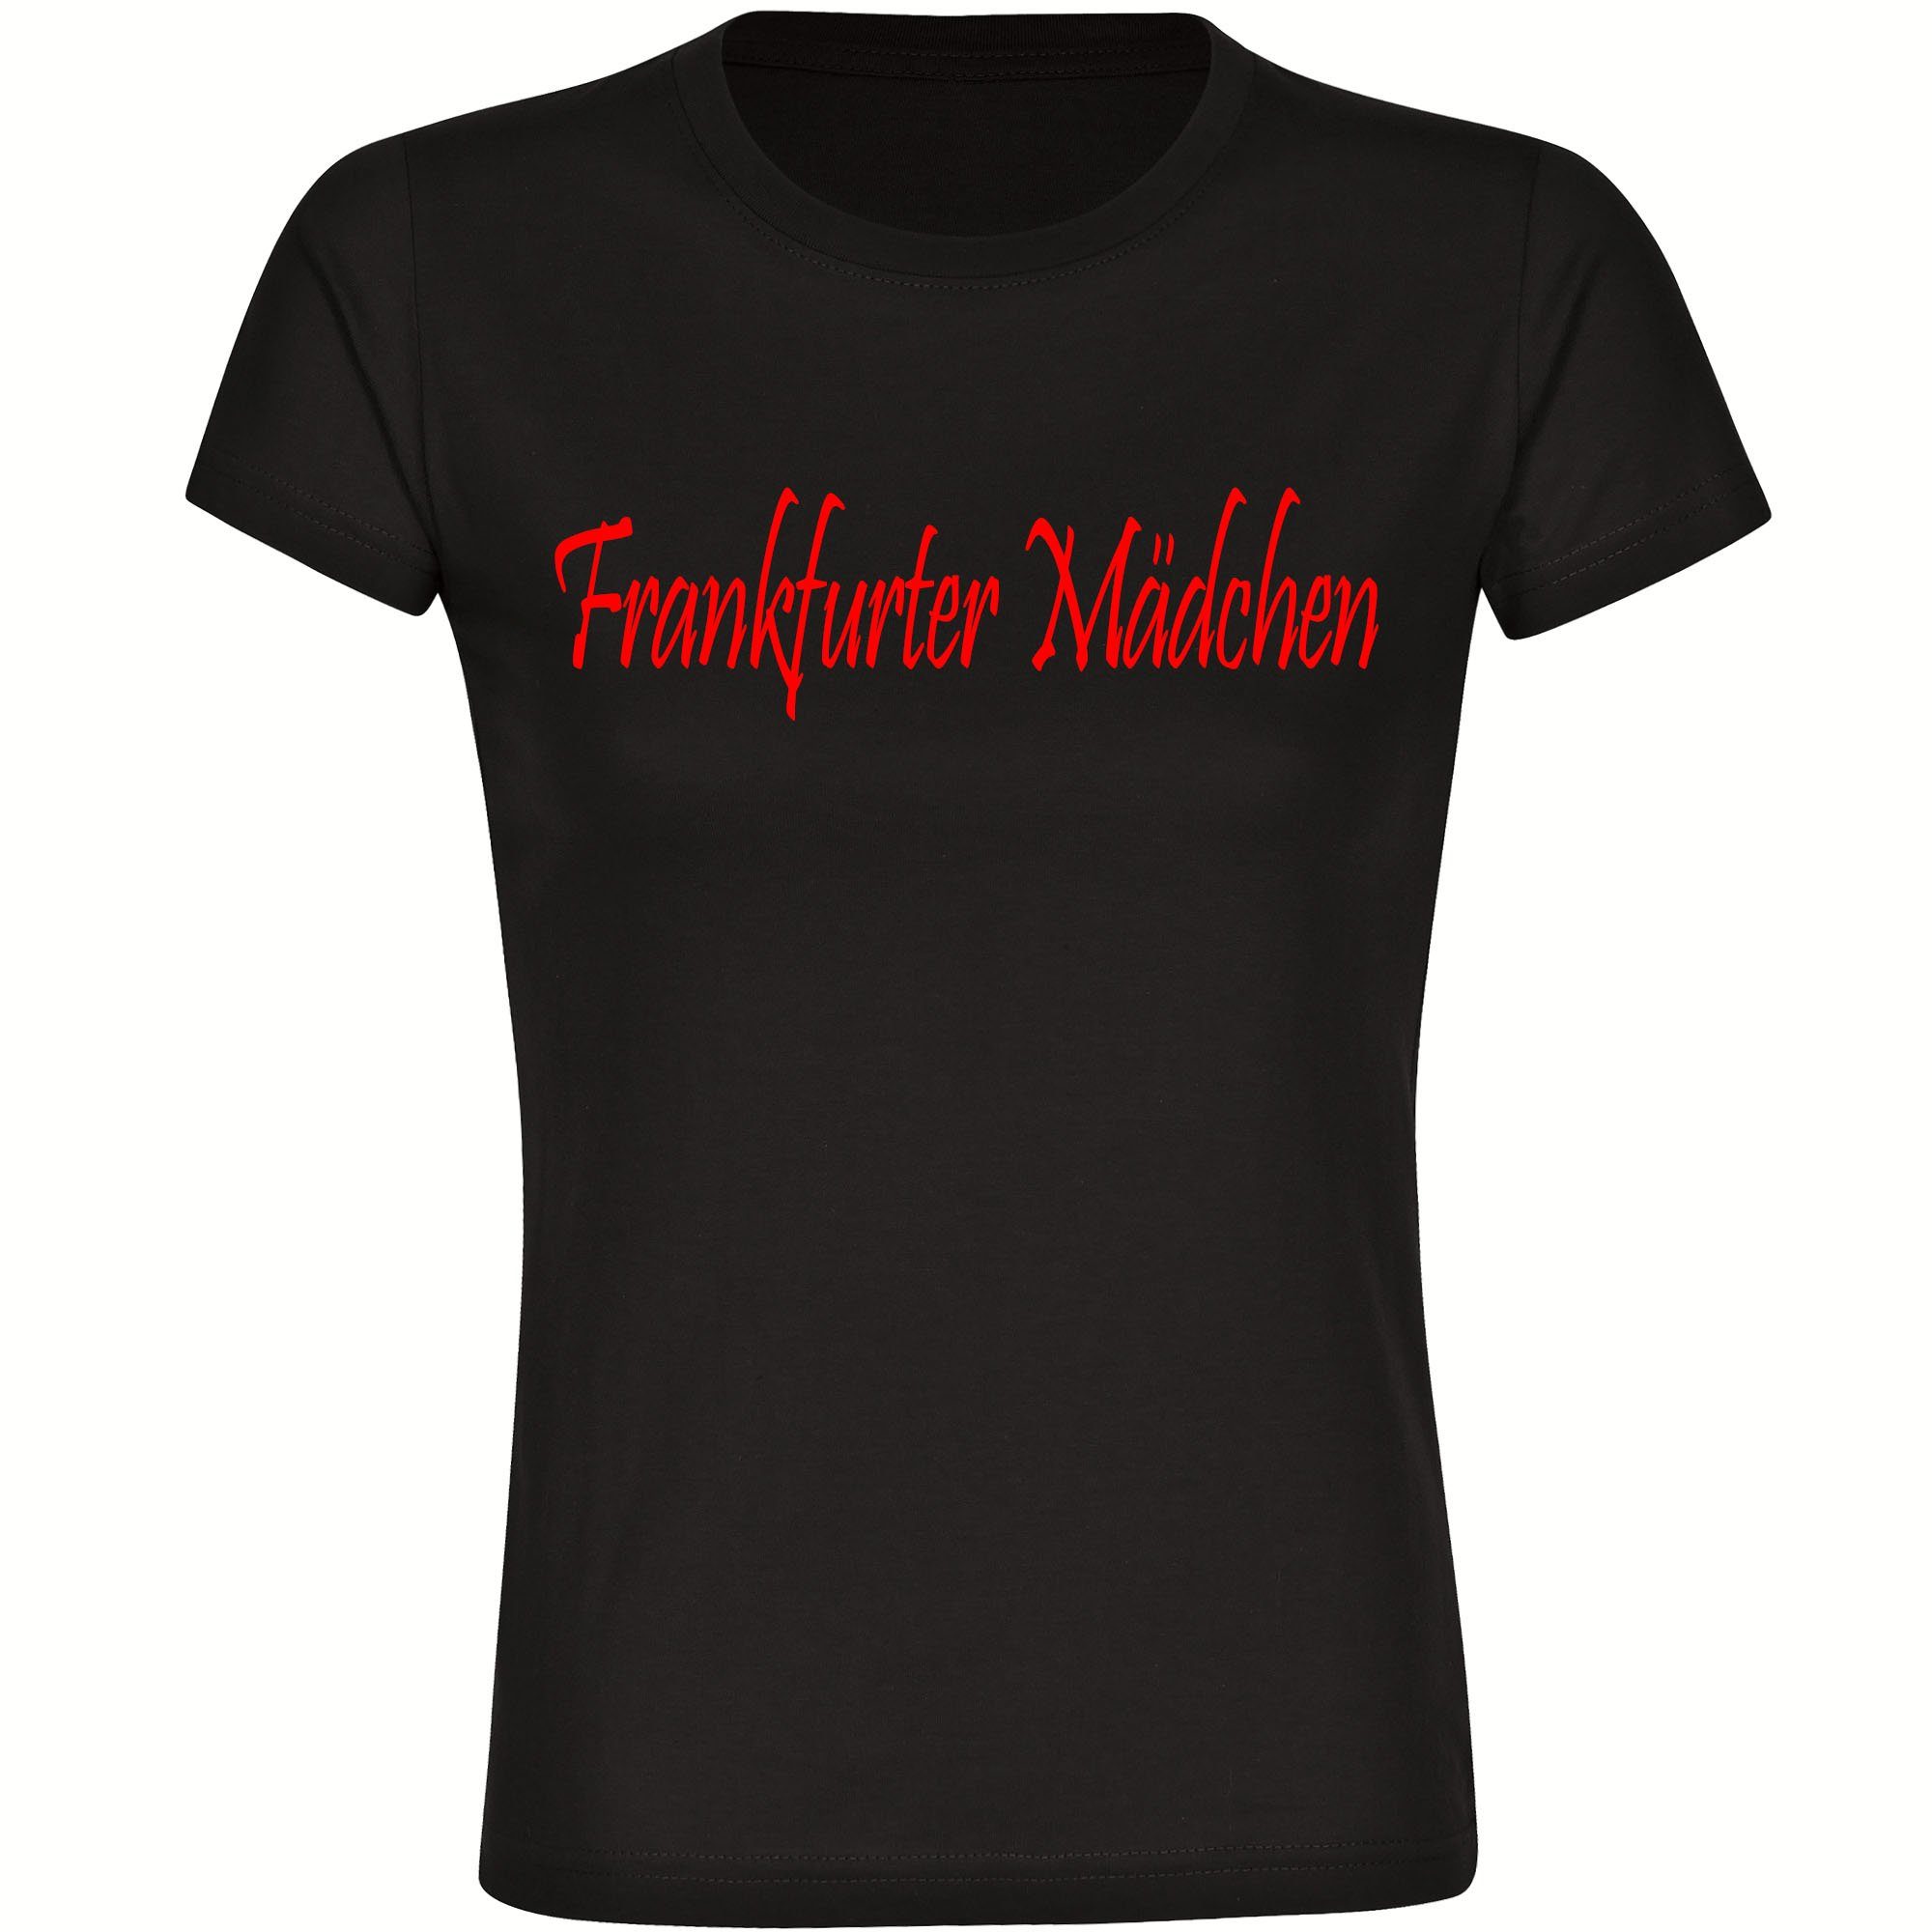 multifanshop T-Shirt Kinder Frankfurt - Frankfurter Mädchen - Boy Girl